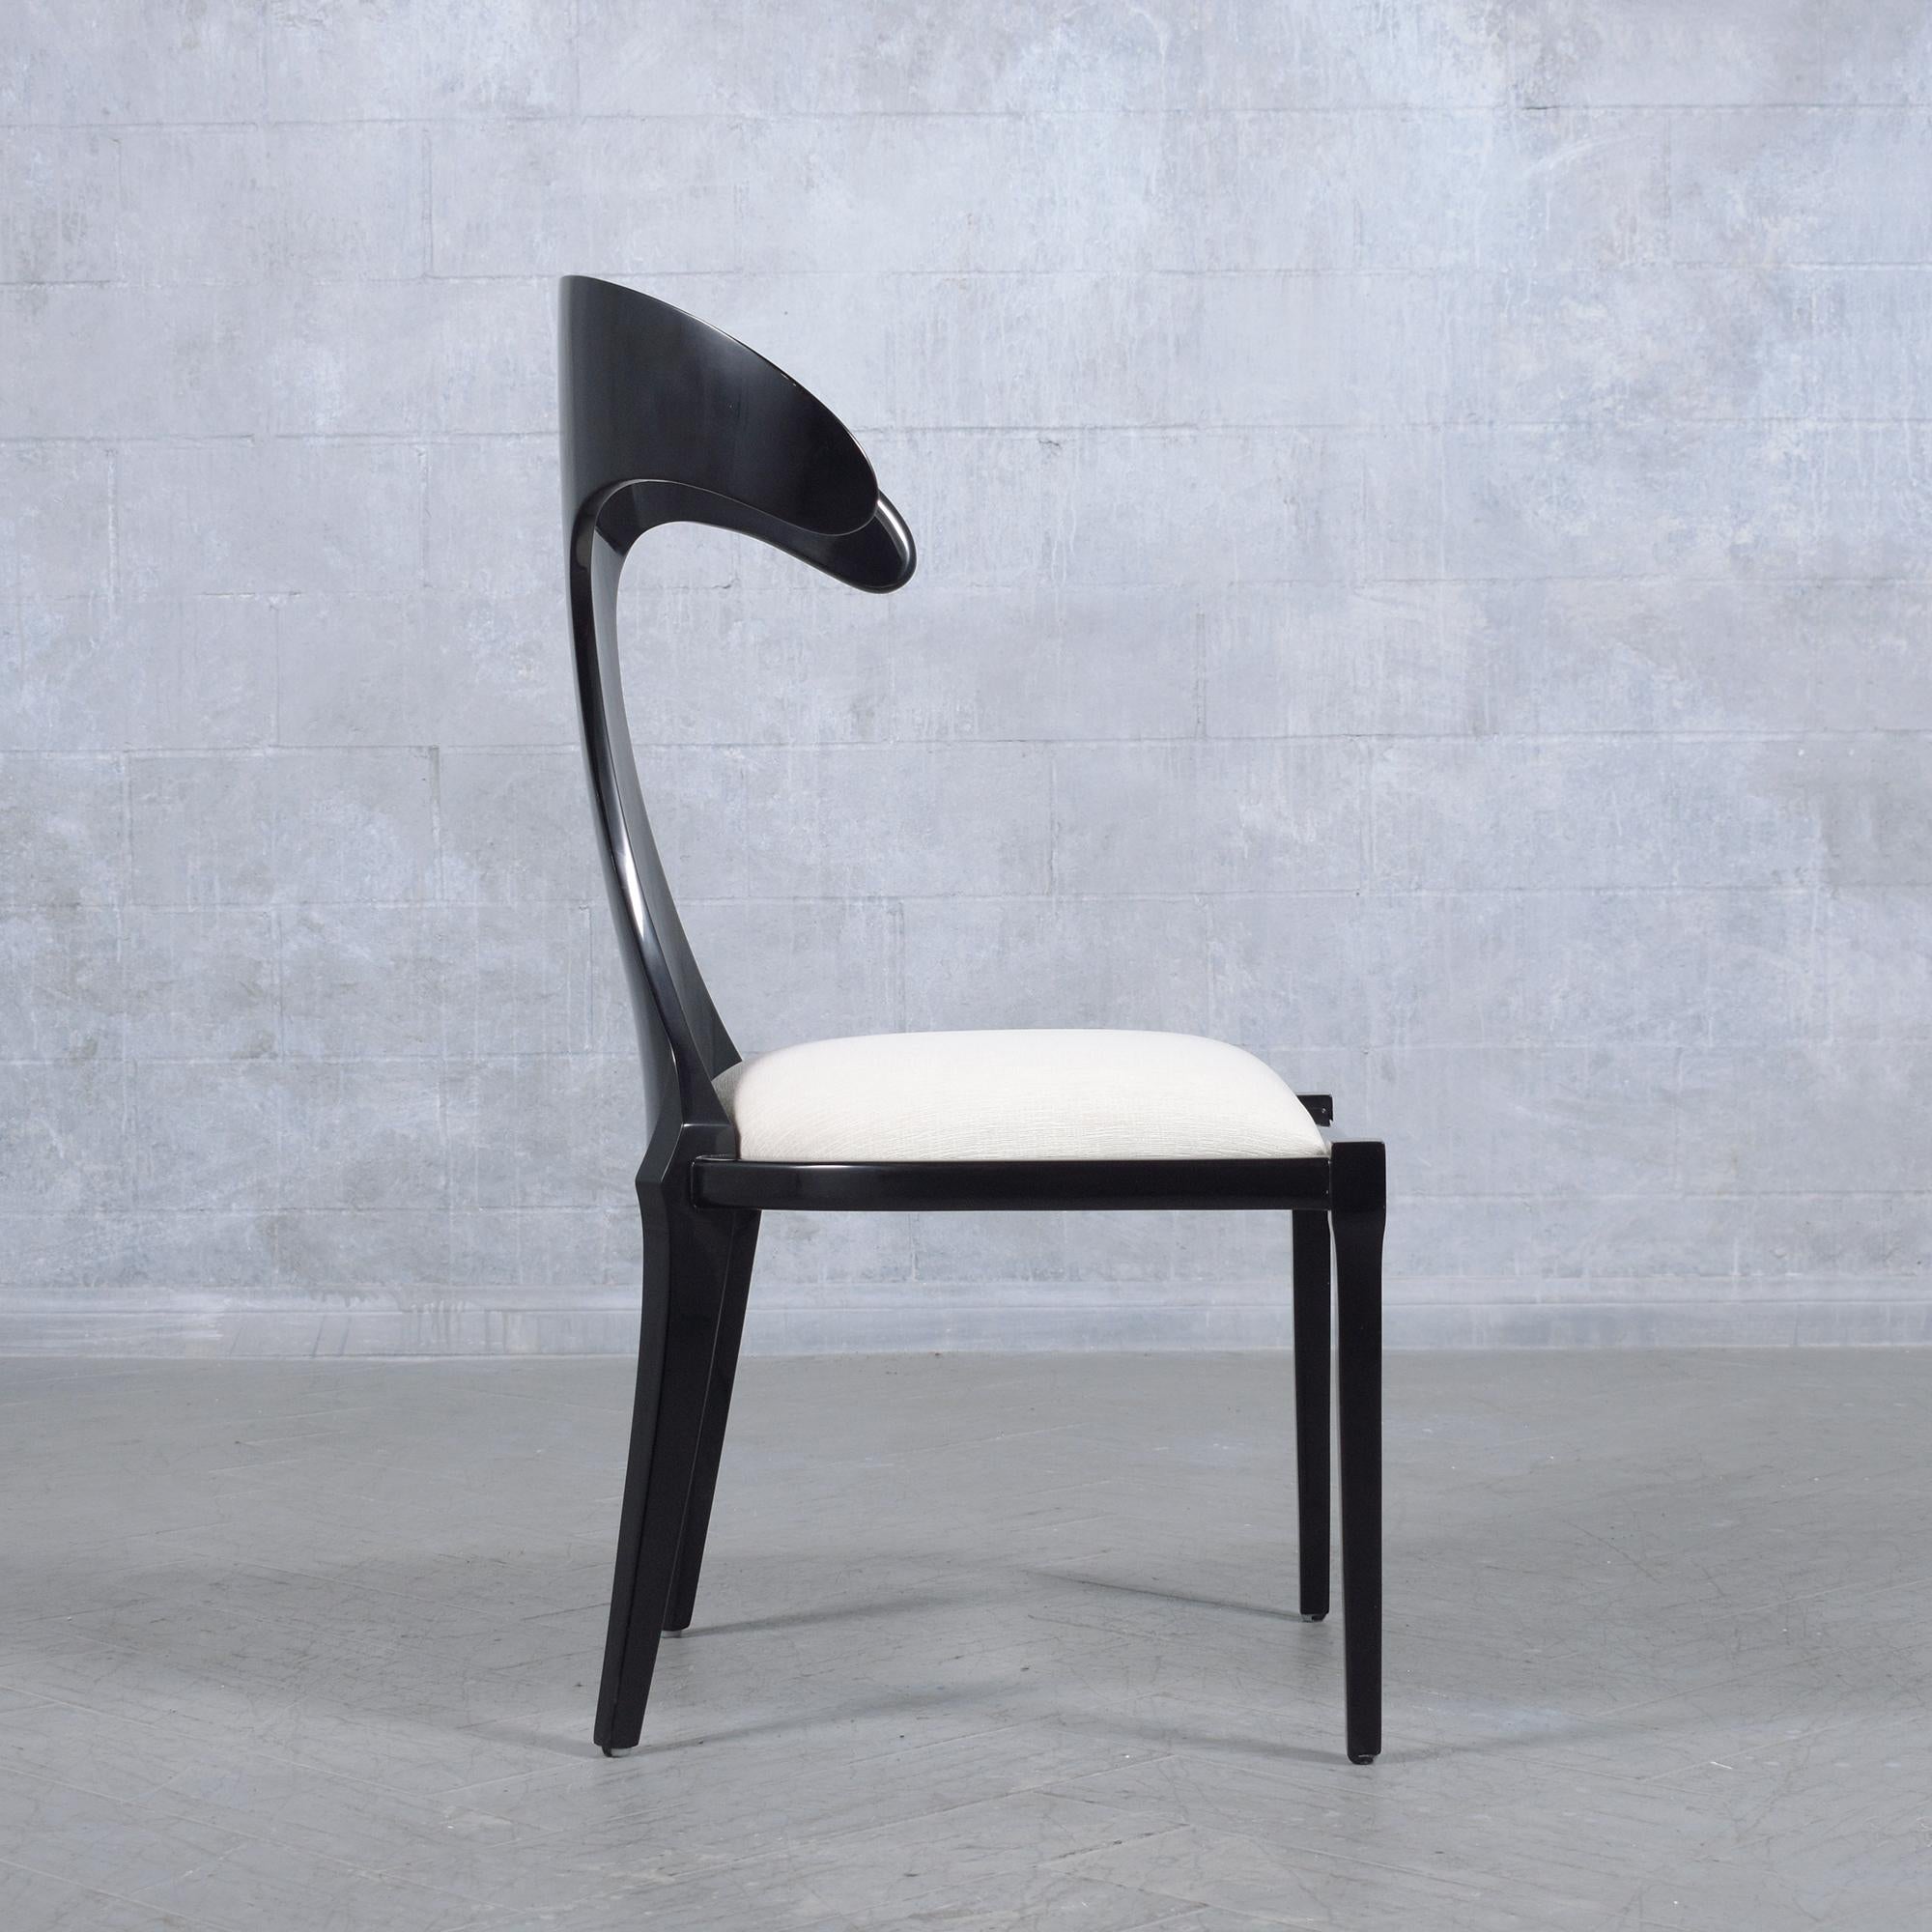 Carved Ebonized Modernism Side Chair: Refinished Bent Wood with High Backrest Design For Sale